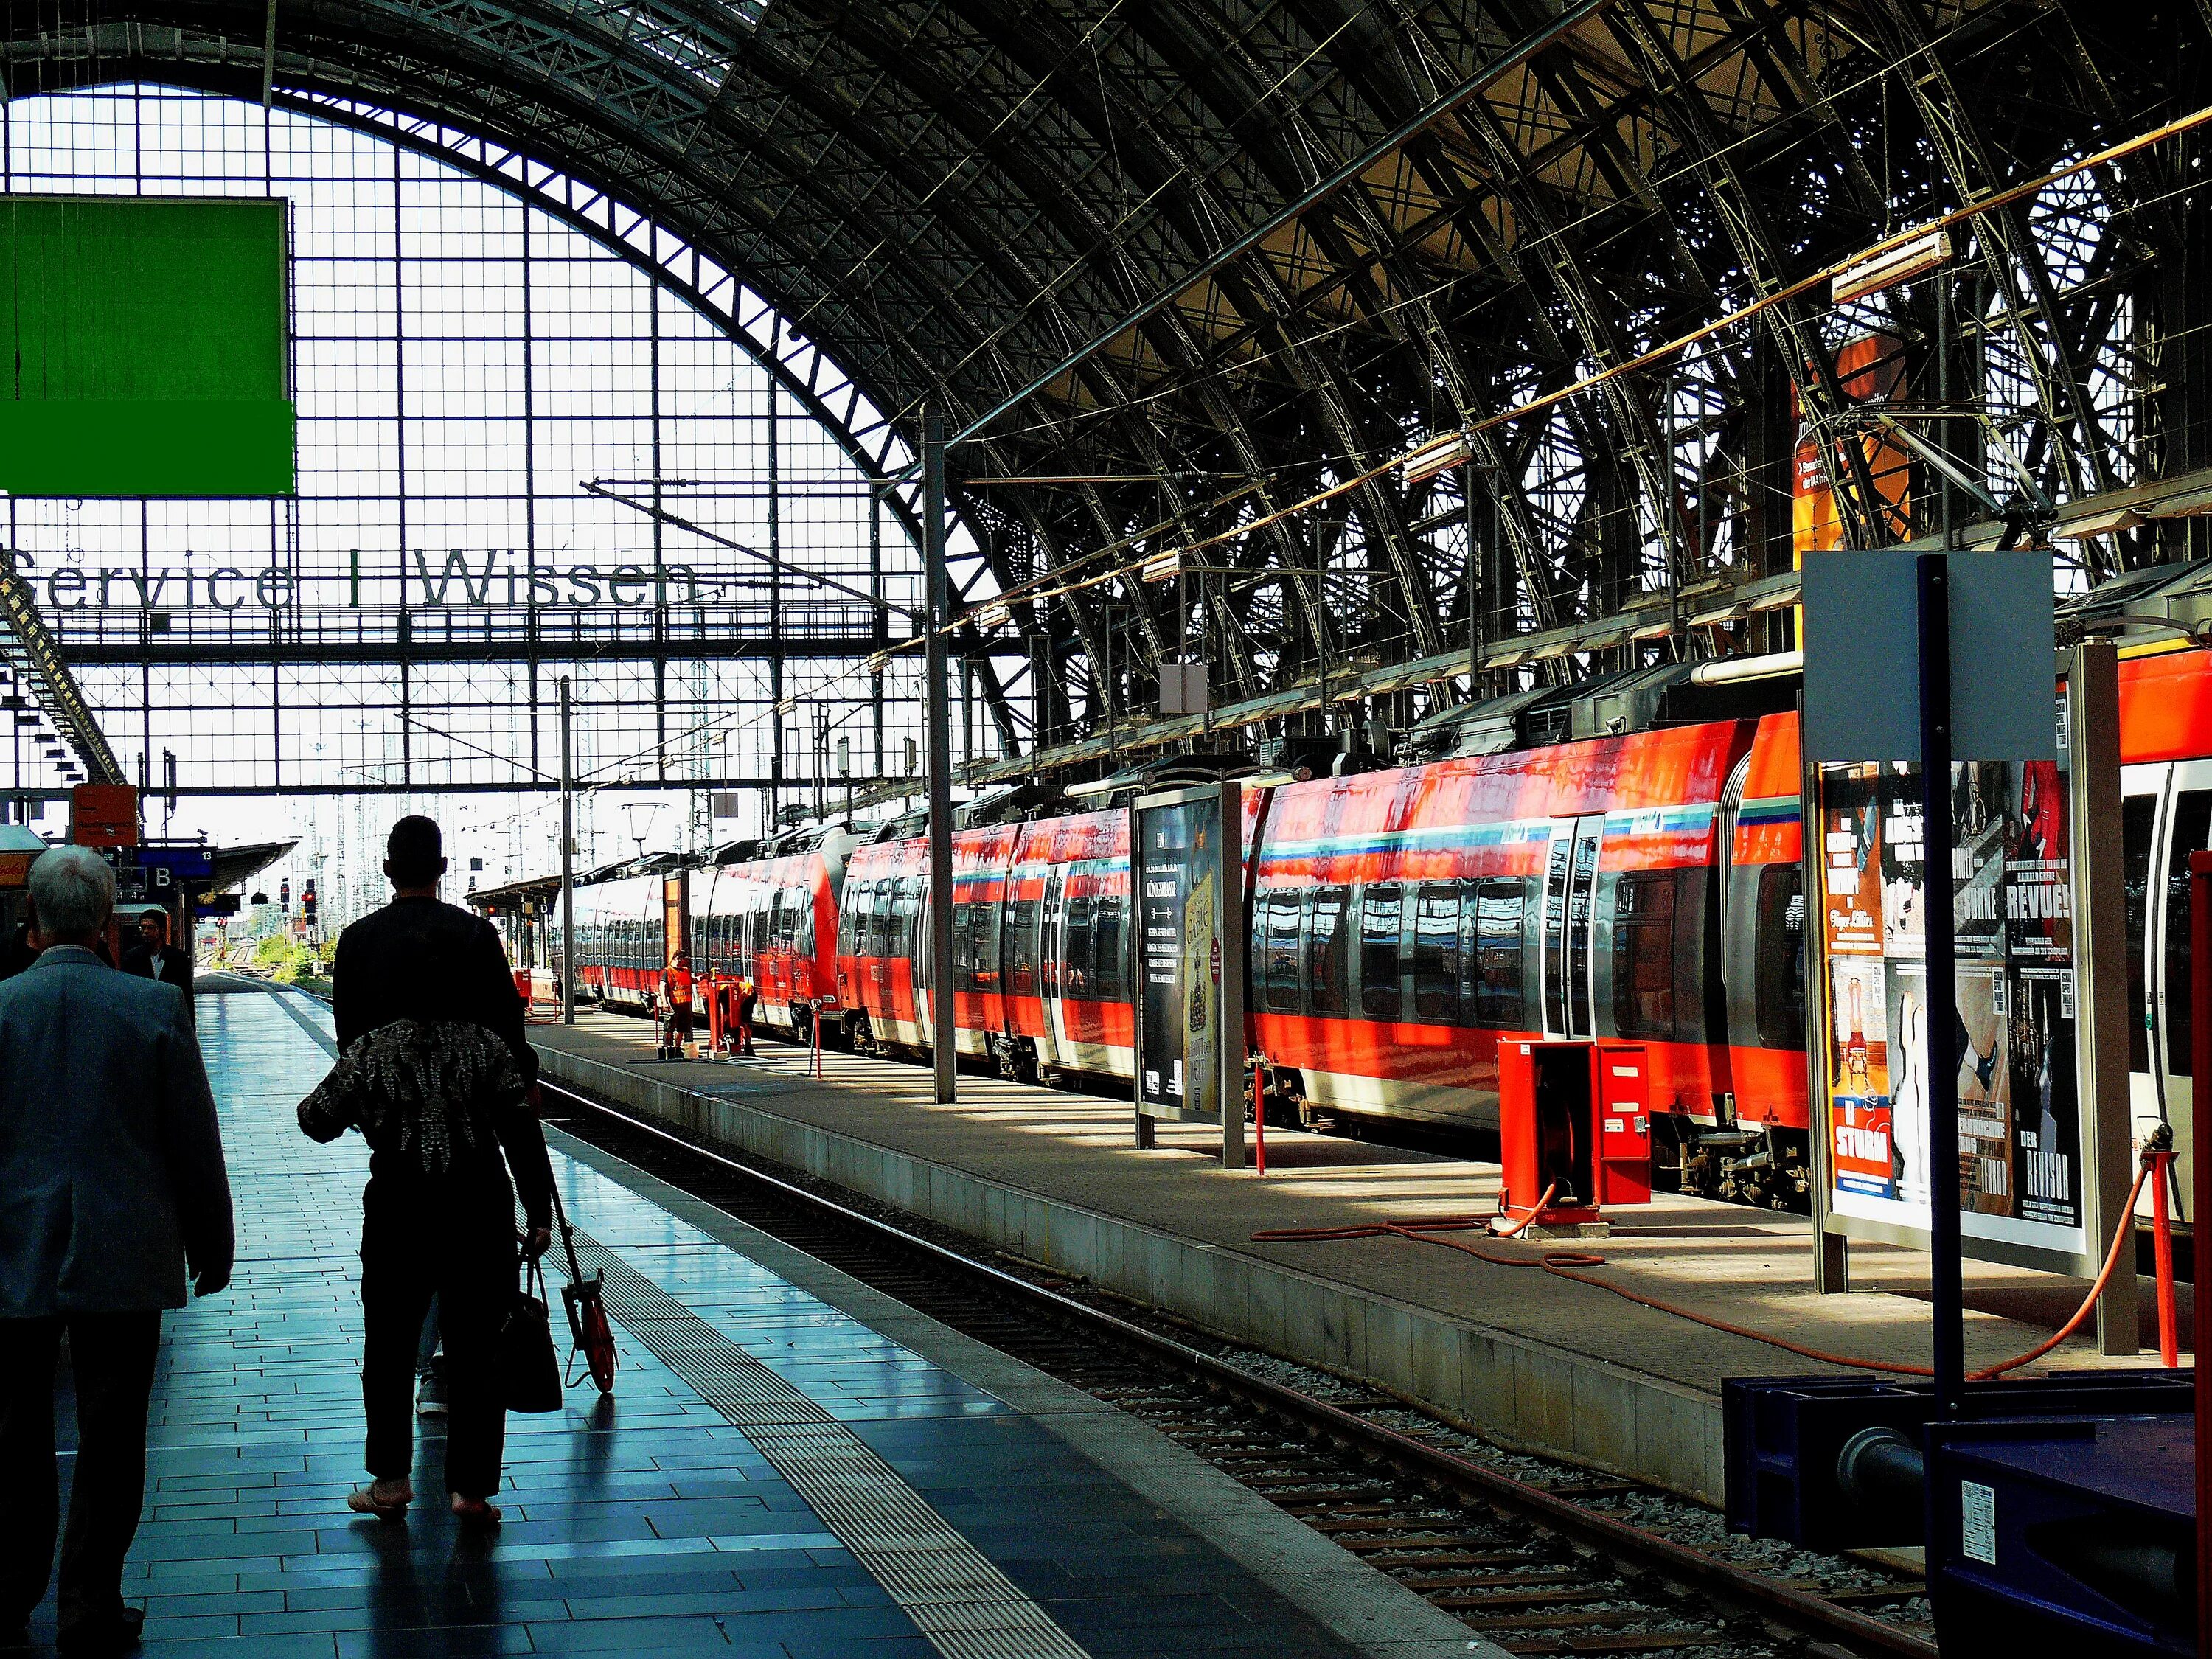 Городской транспорт вокзал. Франкфурт Перон. Railway Station – станция вокзала. Ж/Д станции в Германии. Вокзал Франкфурт на Майне.